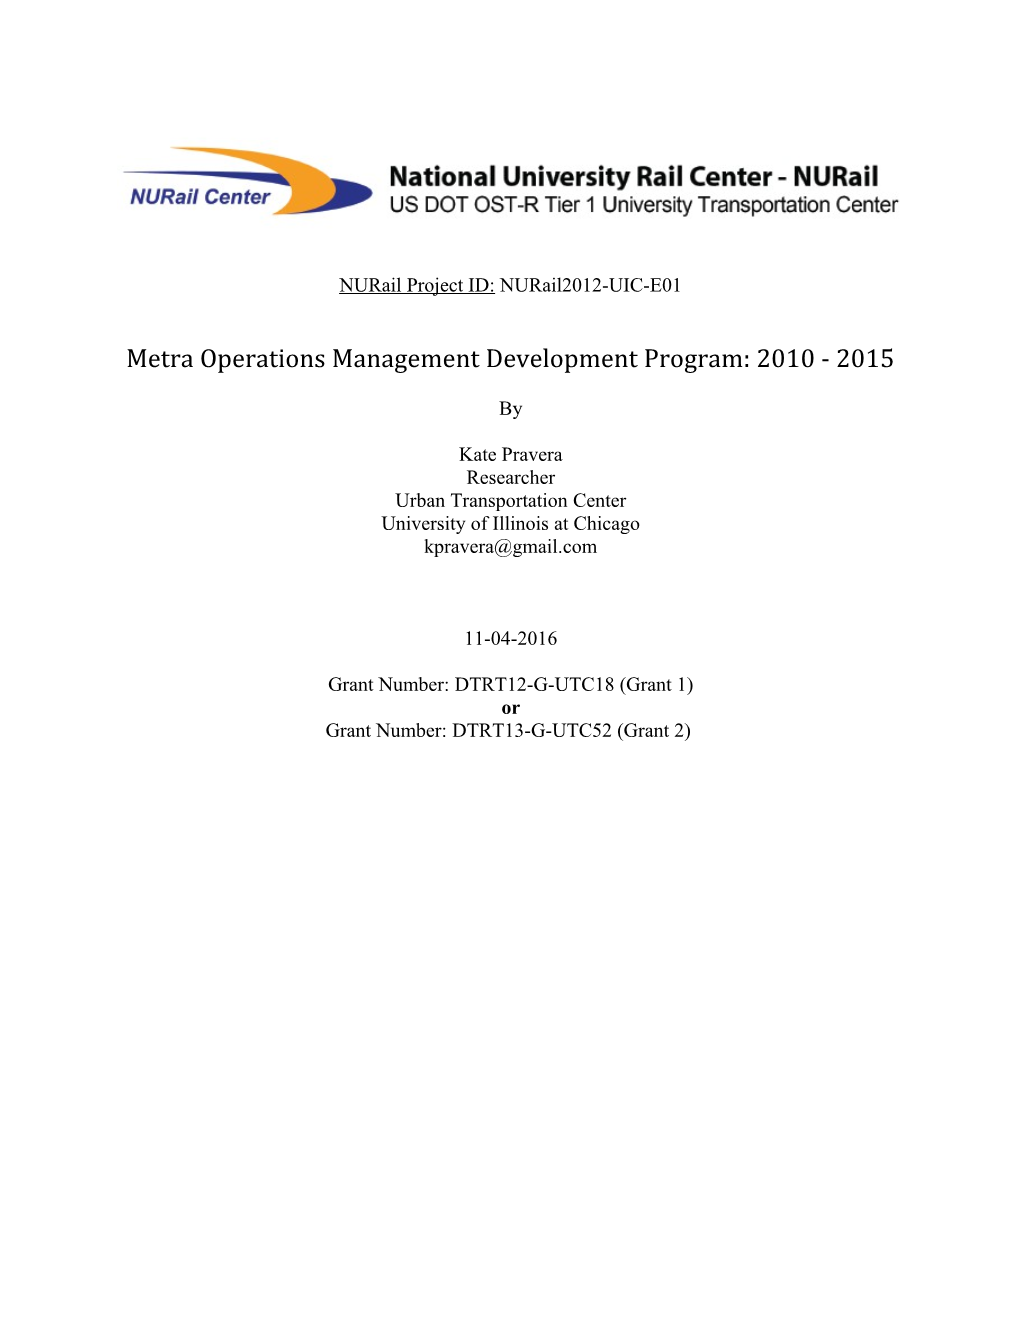 Metra Operations Management Development Program: 2010 - 2015